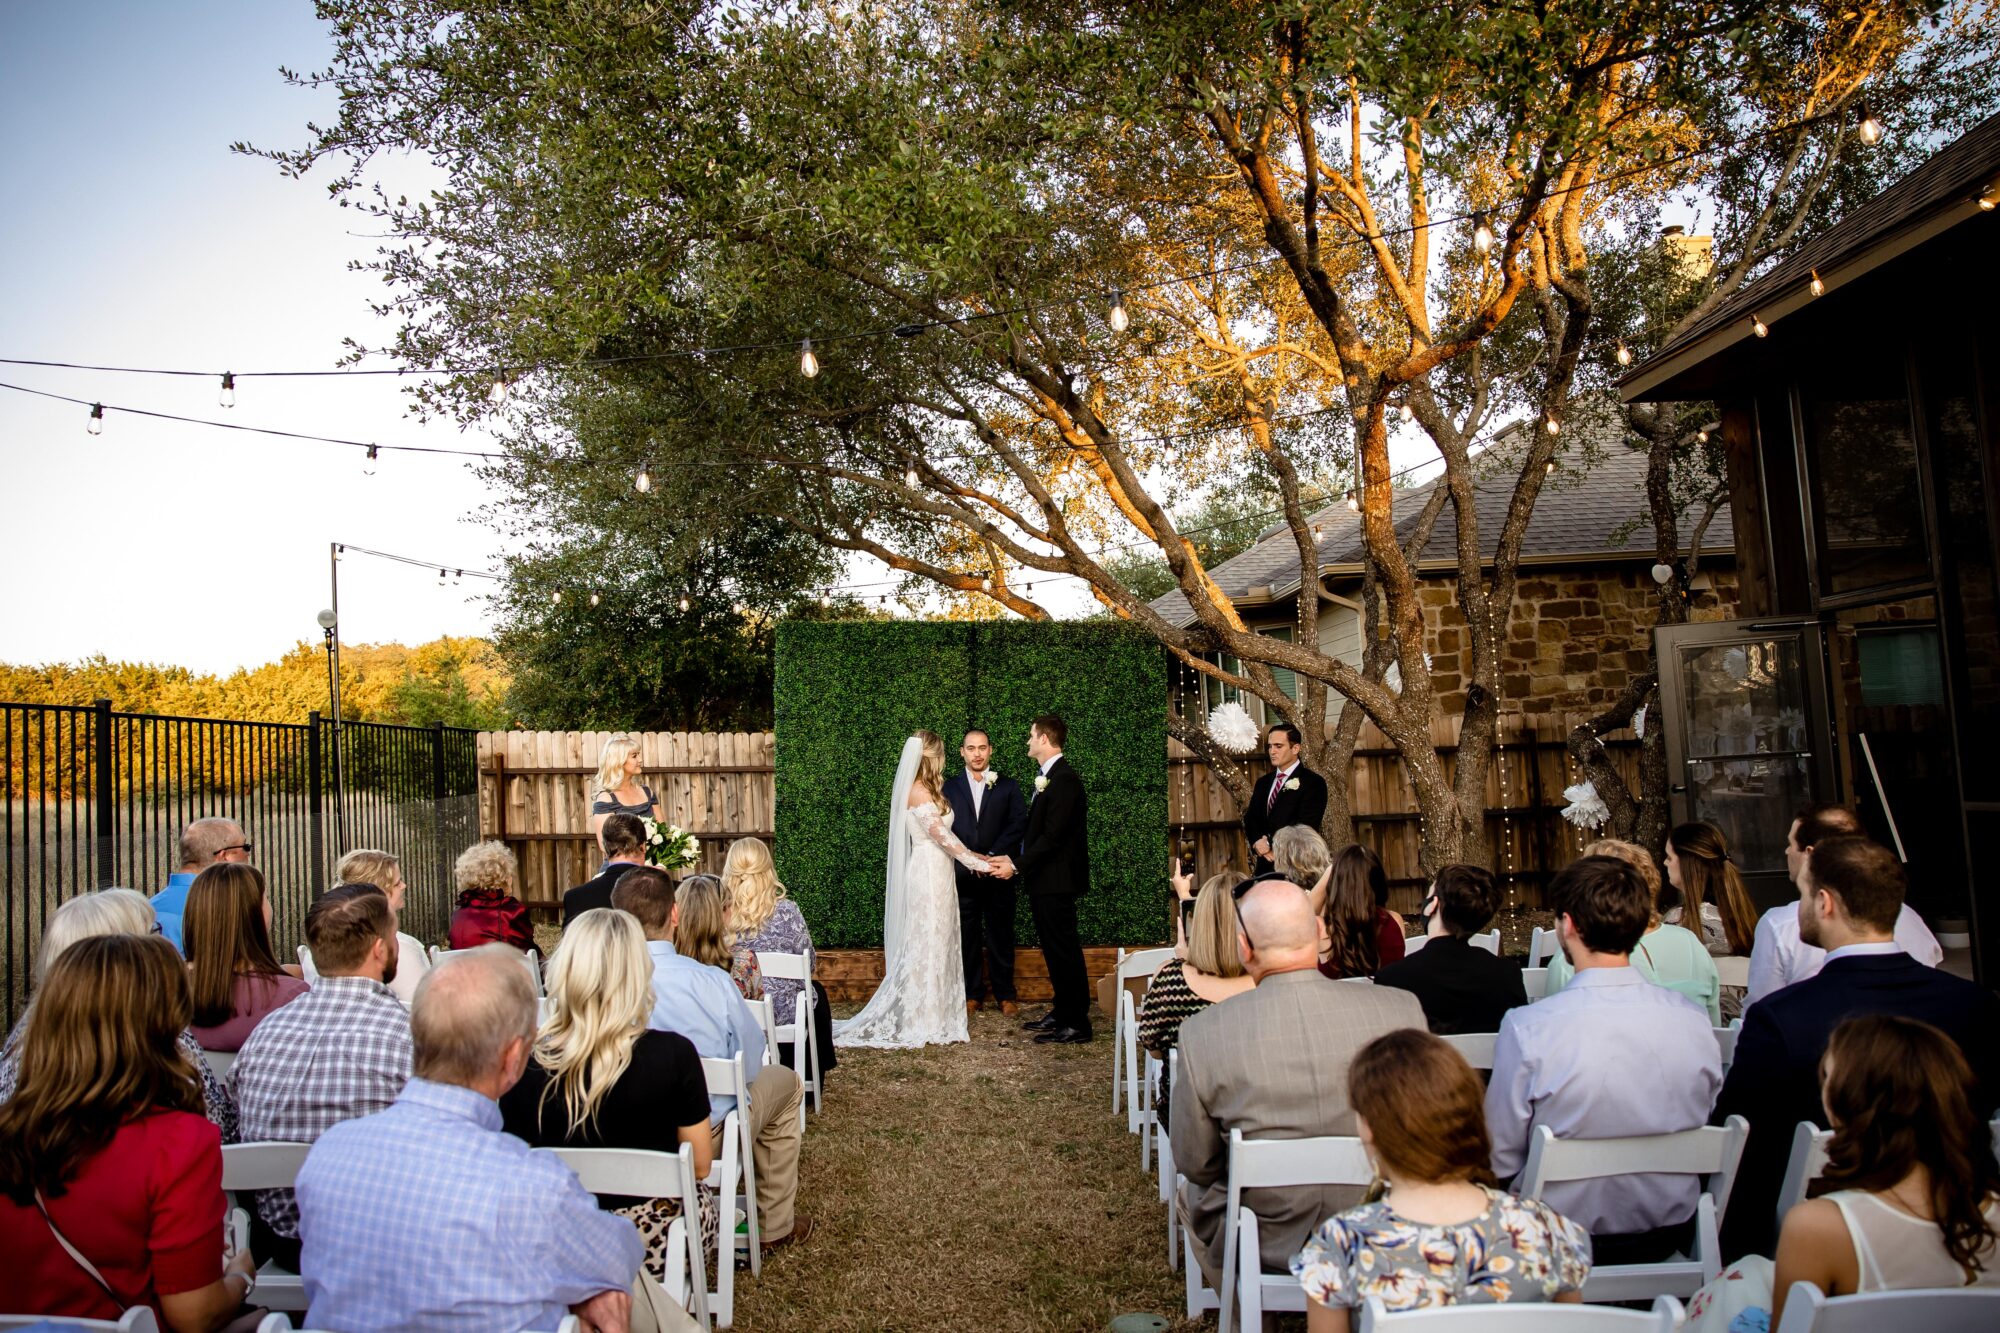 Budget-friendly backyard wedding